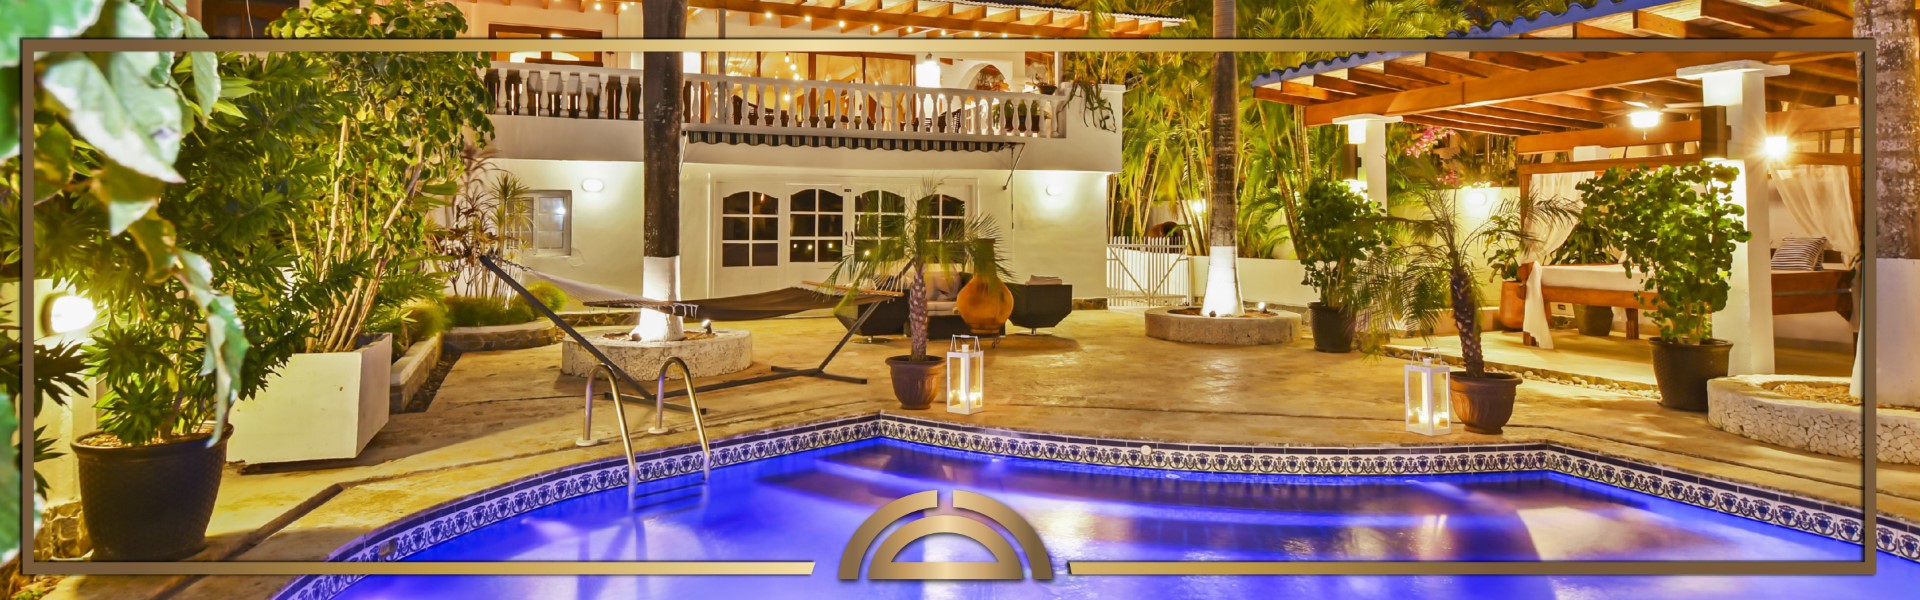 Playa Blanca Luxury Home for Sale